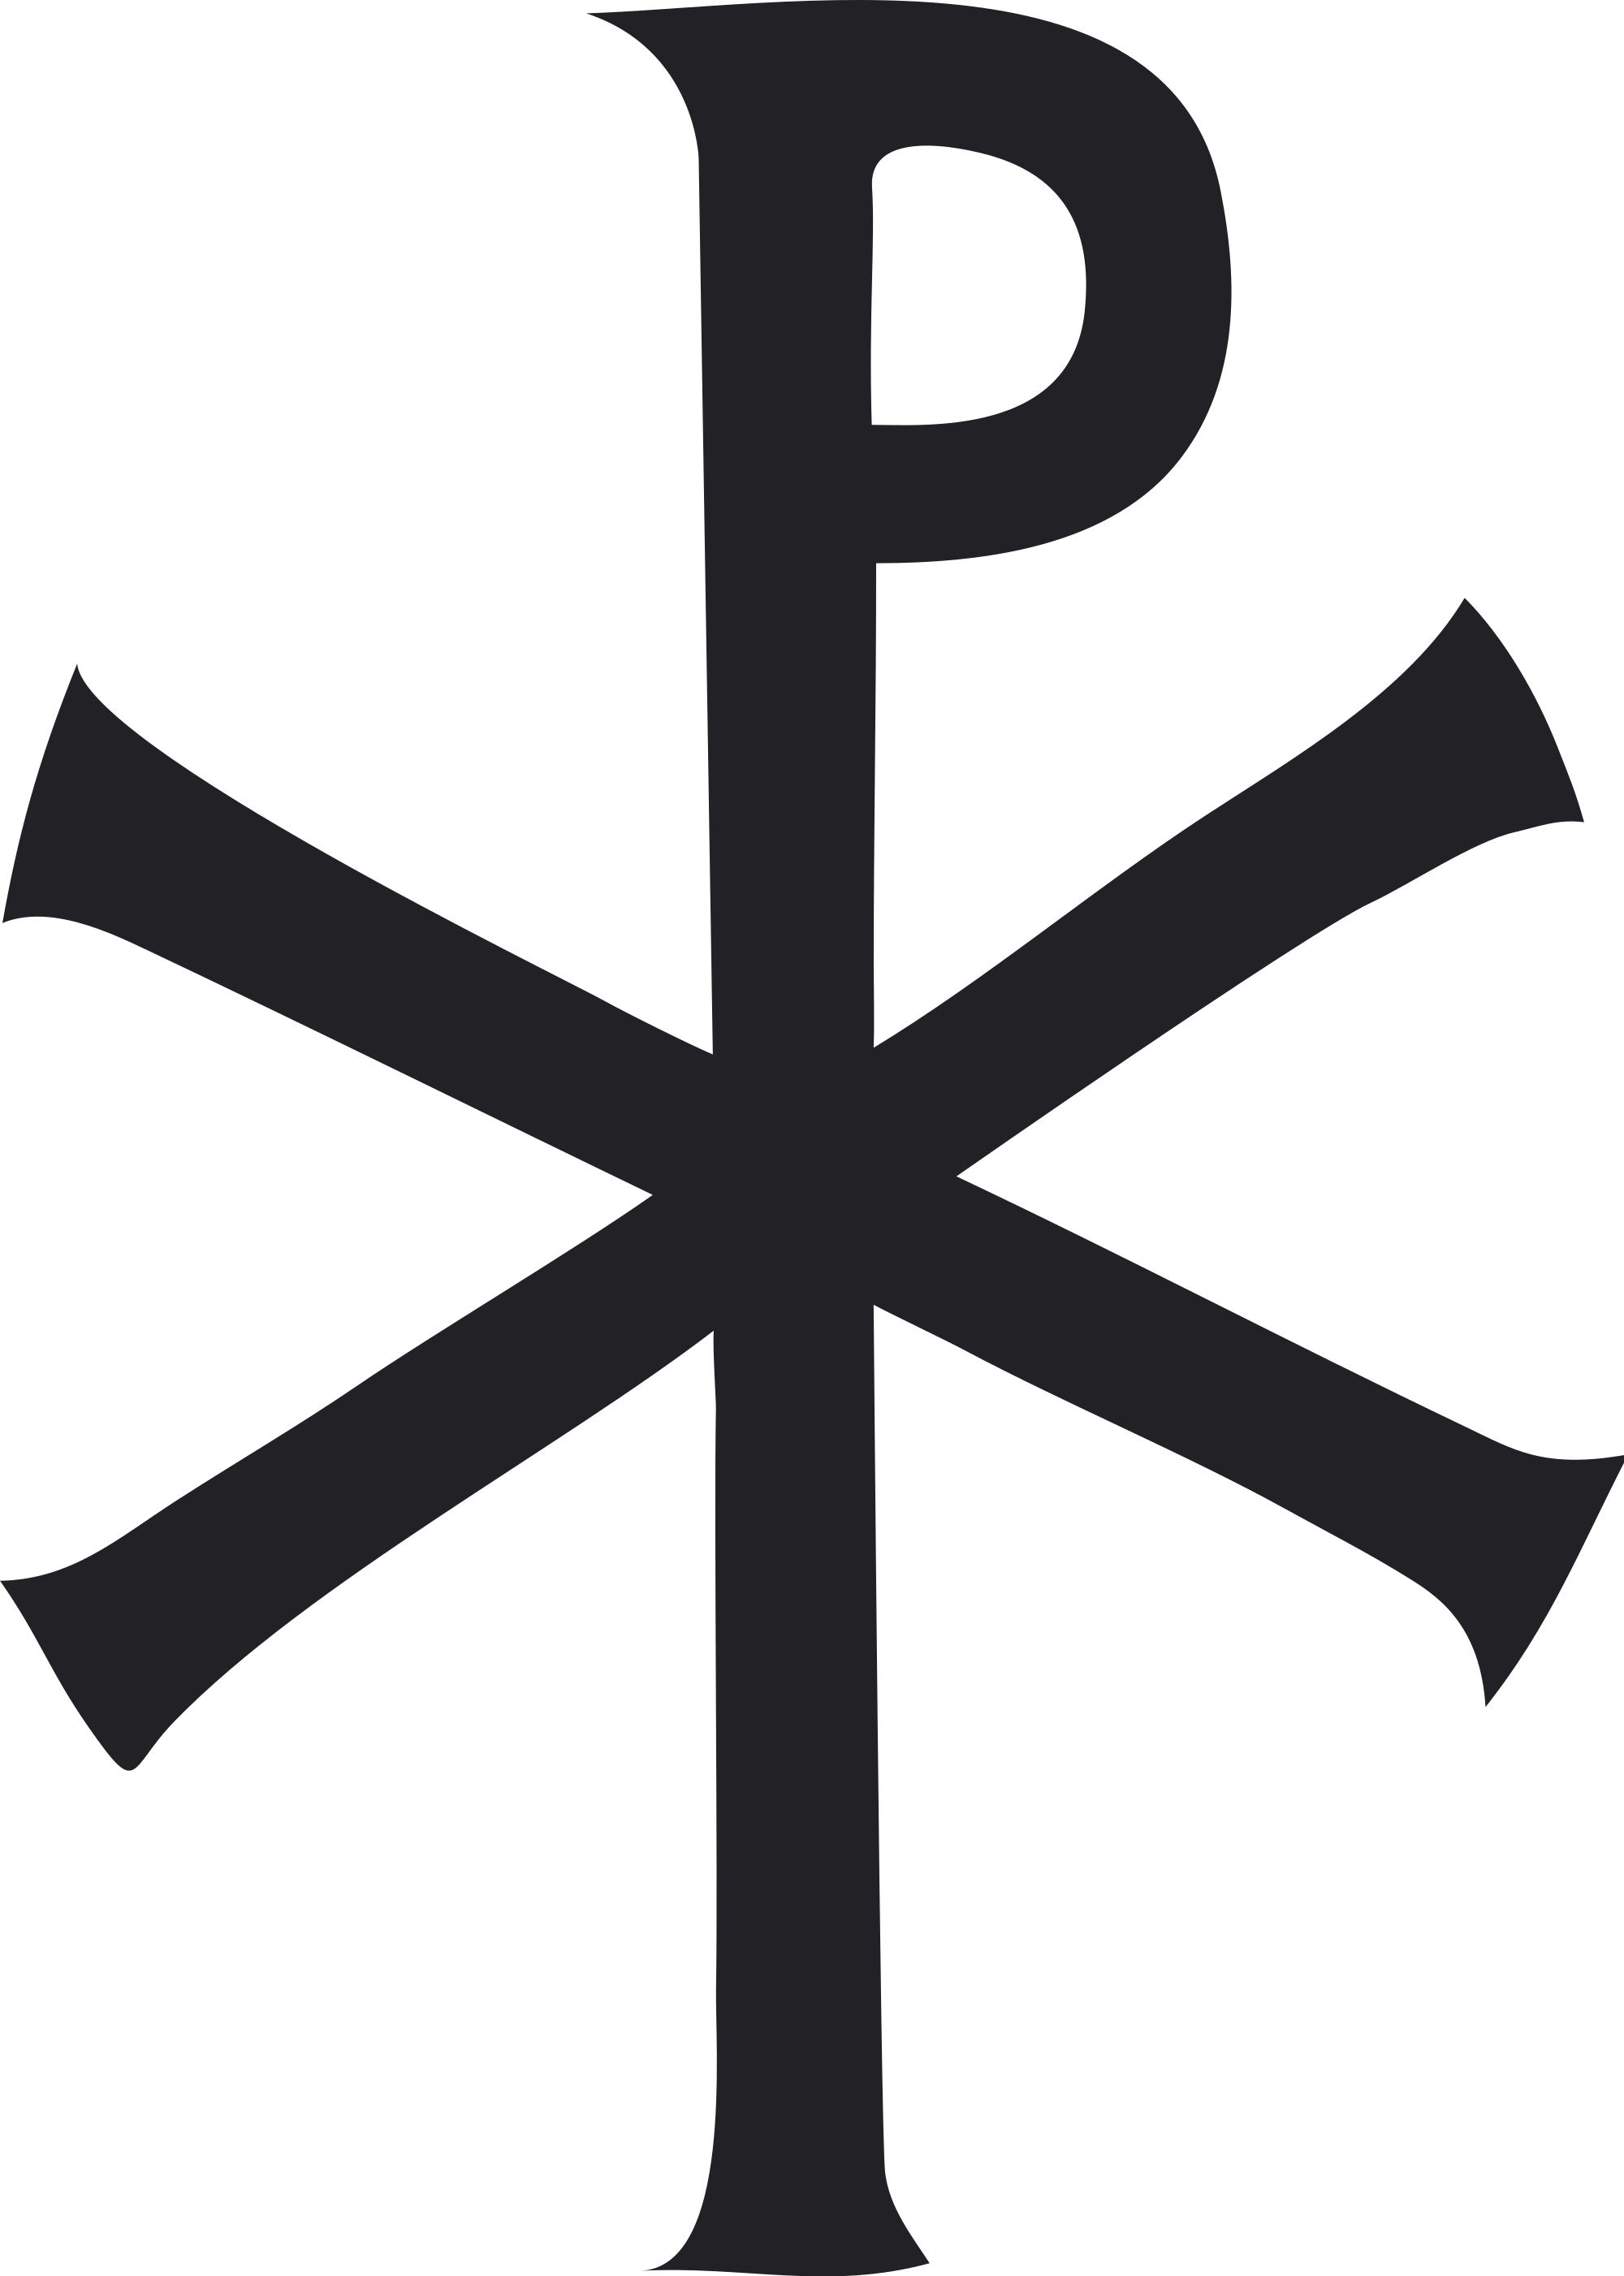 Christogram wikipedia. Gymnastics clipart iron cross